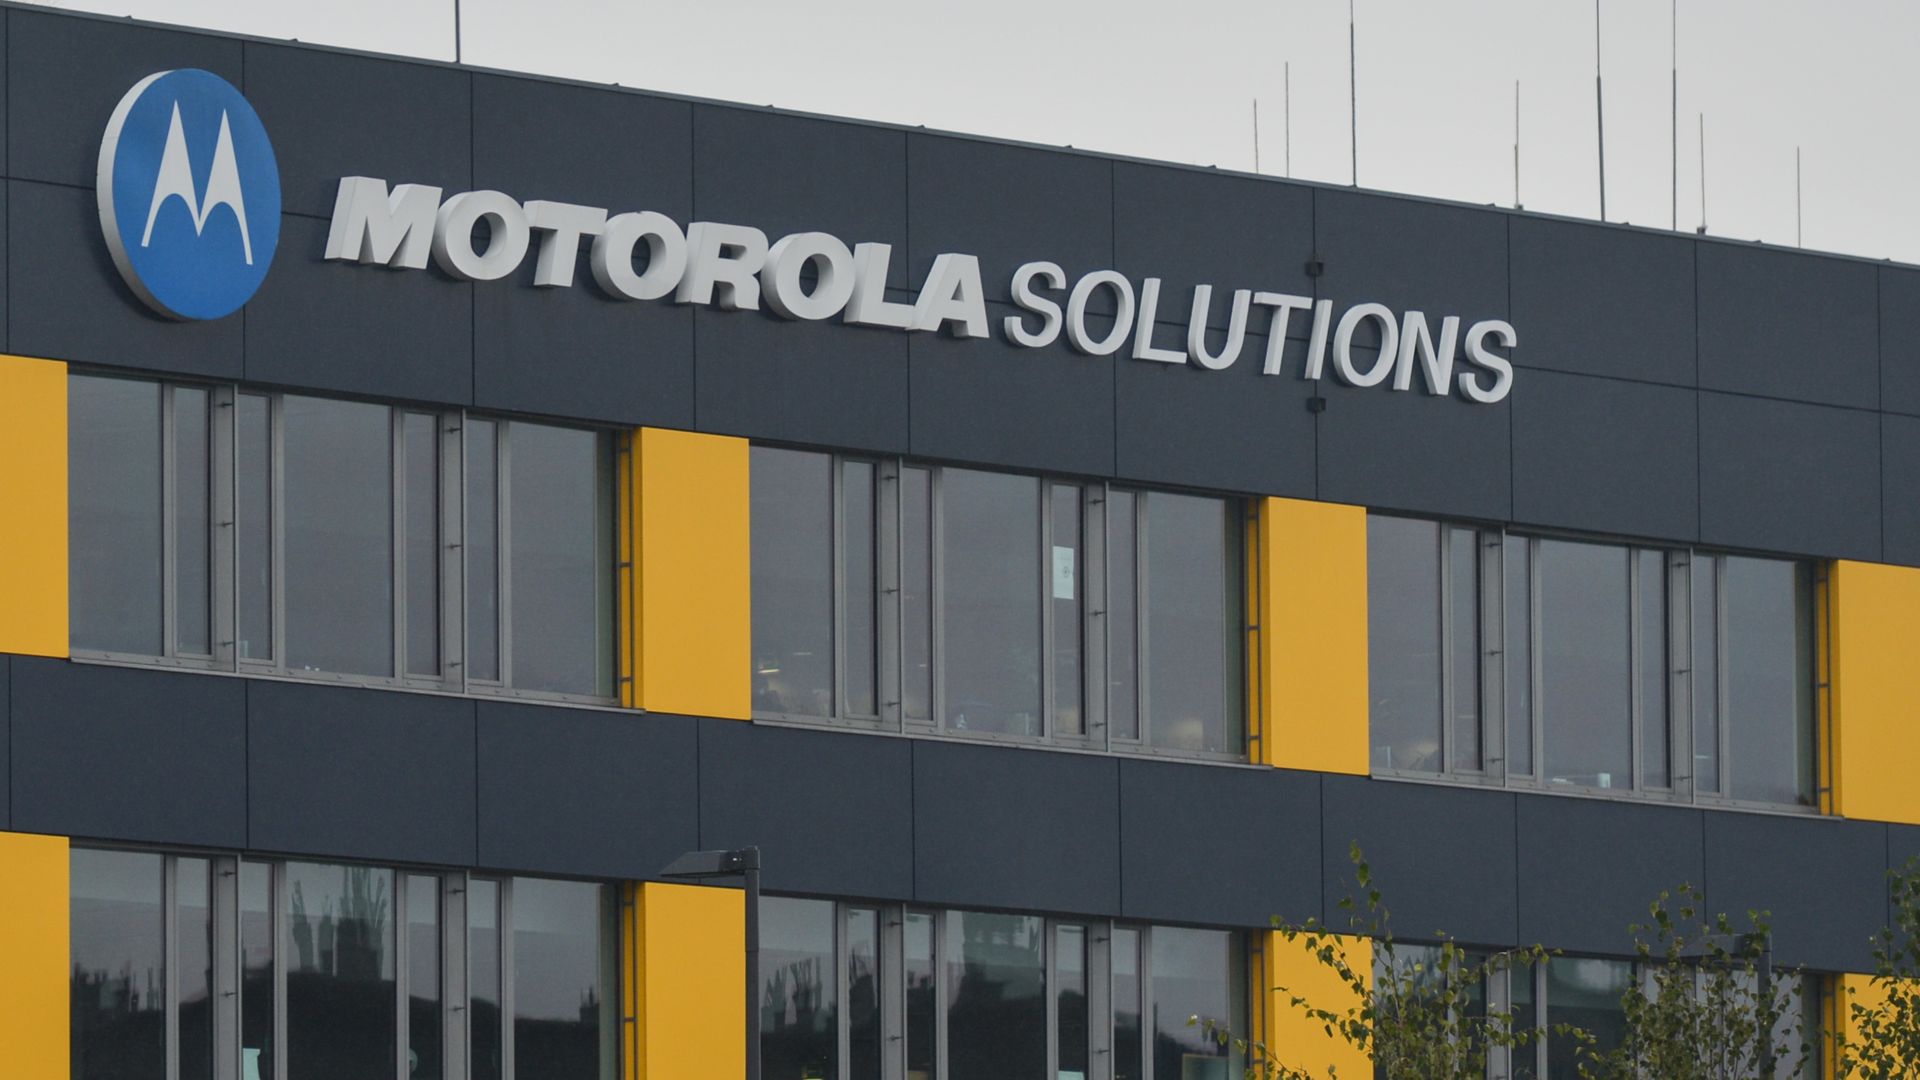 A Motorola Solutions office building in Krakow, Poland. 